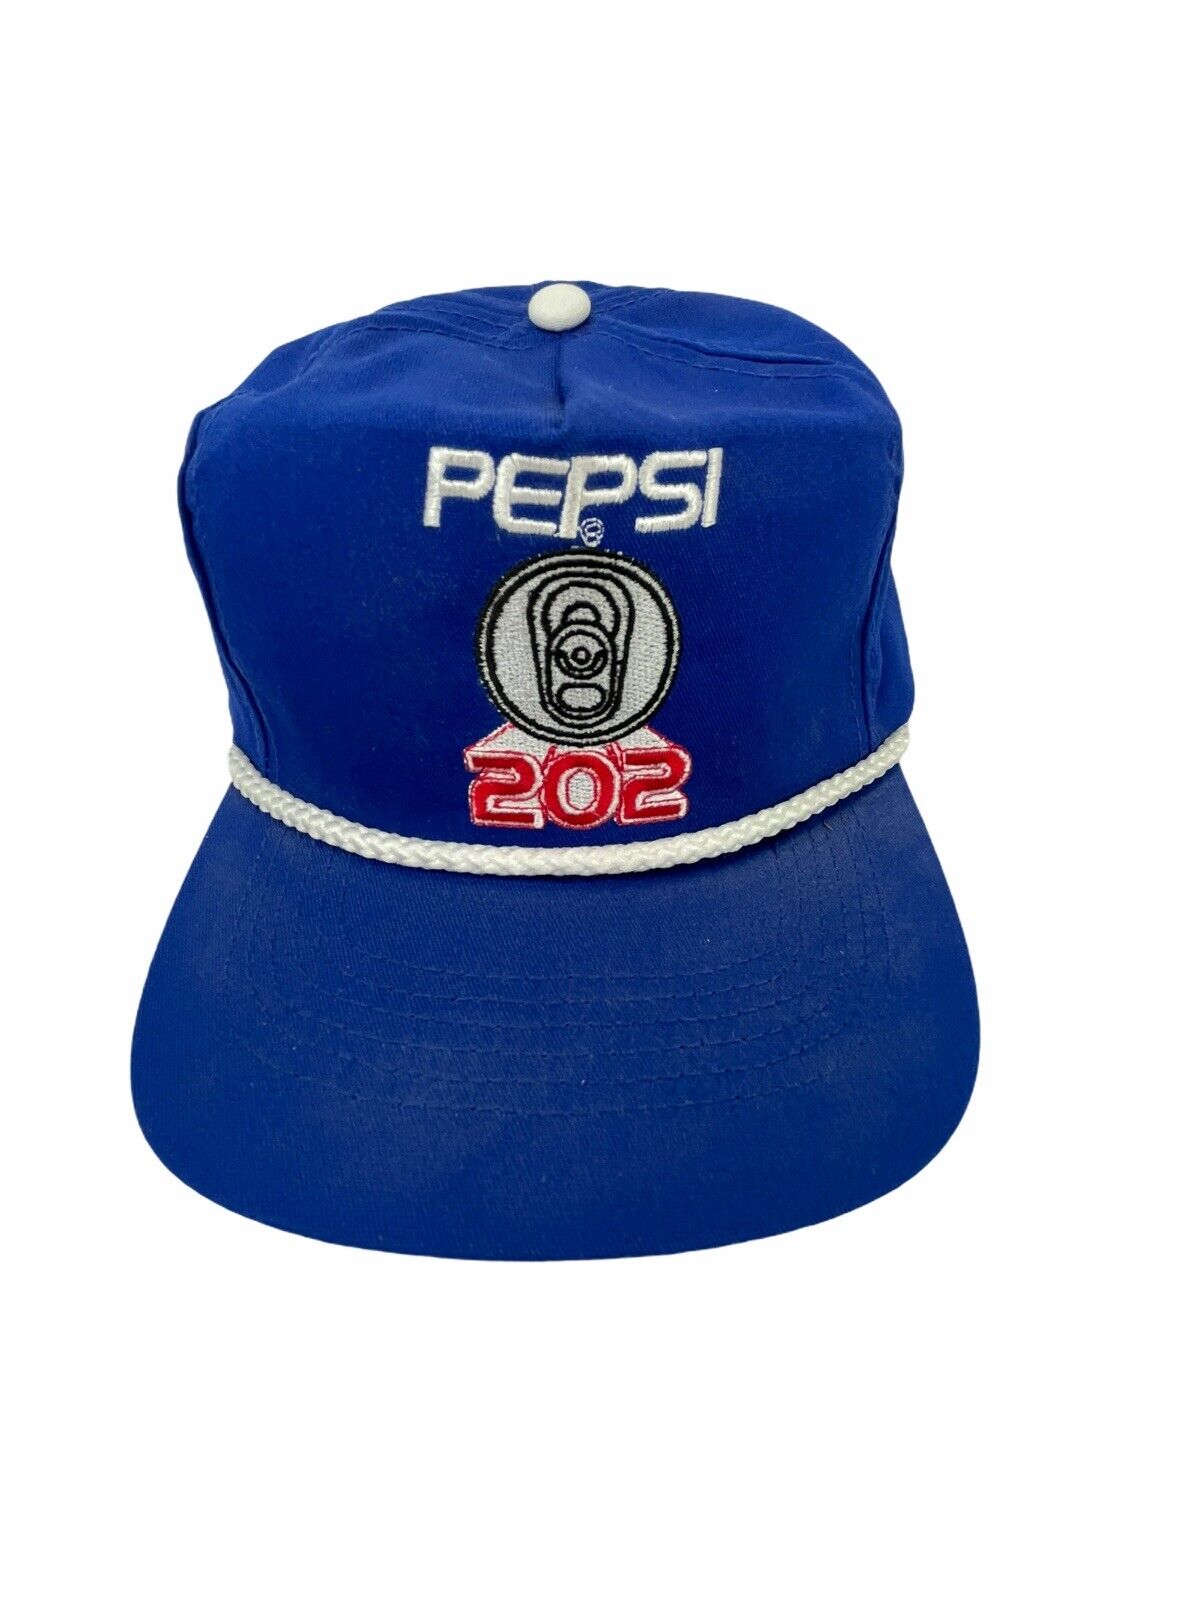 VINTAGE Pepsi 202 Leather Strap Cap Snapback Hat Snap Back Made USA NOS